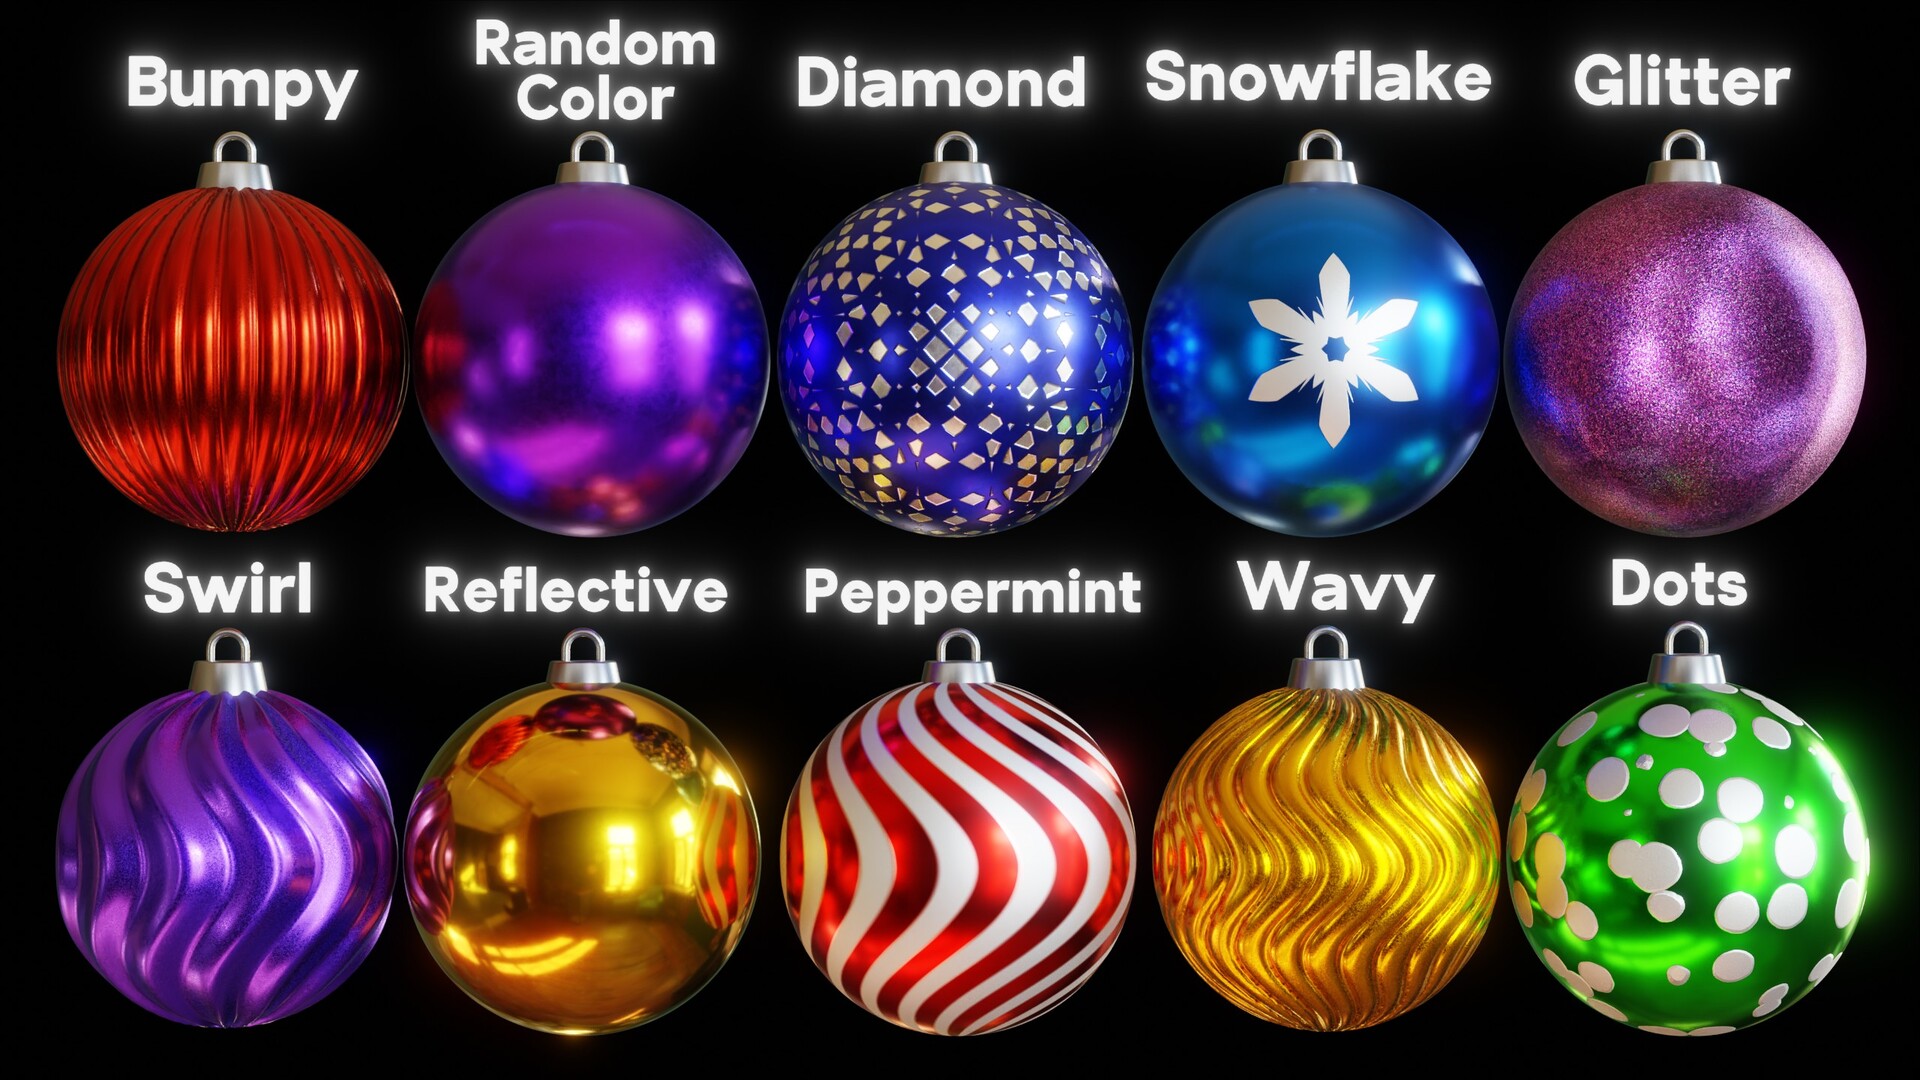 Procedural Christmas Ball Ornaments (Blender Tutorial) 